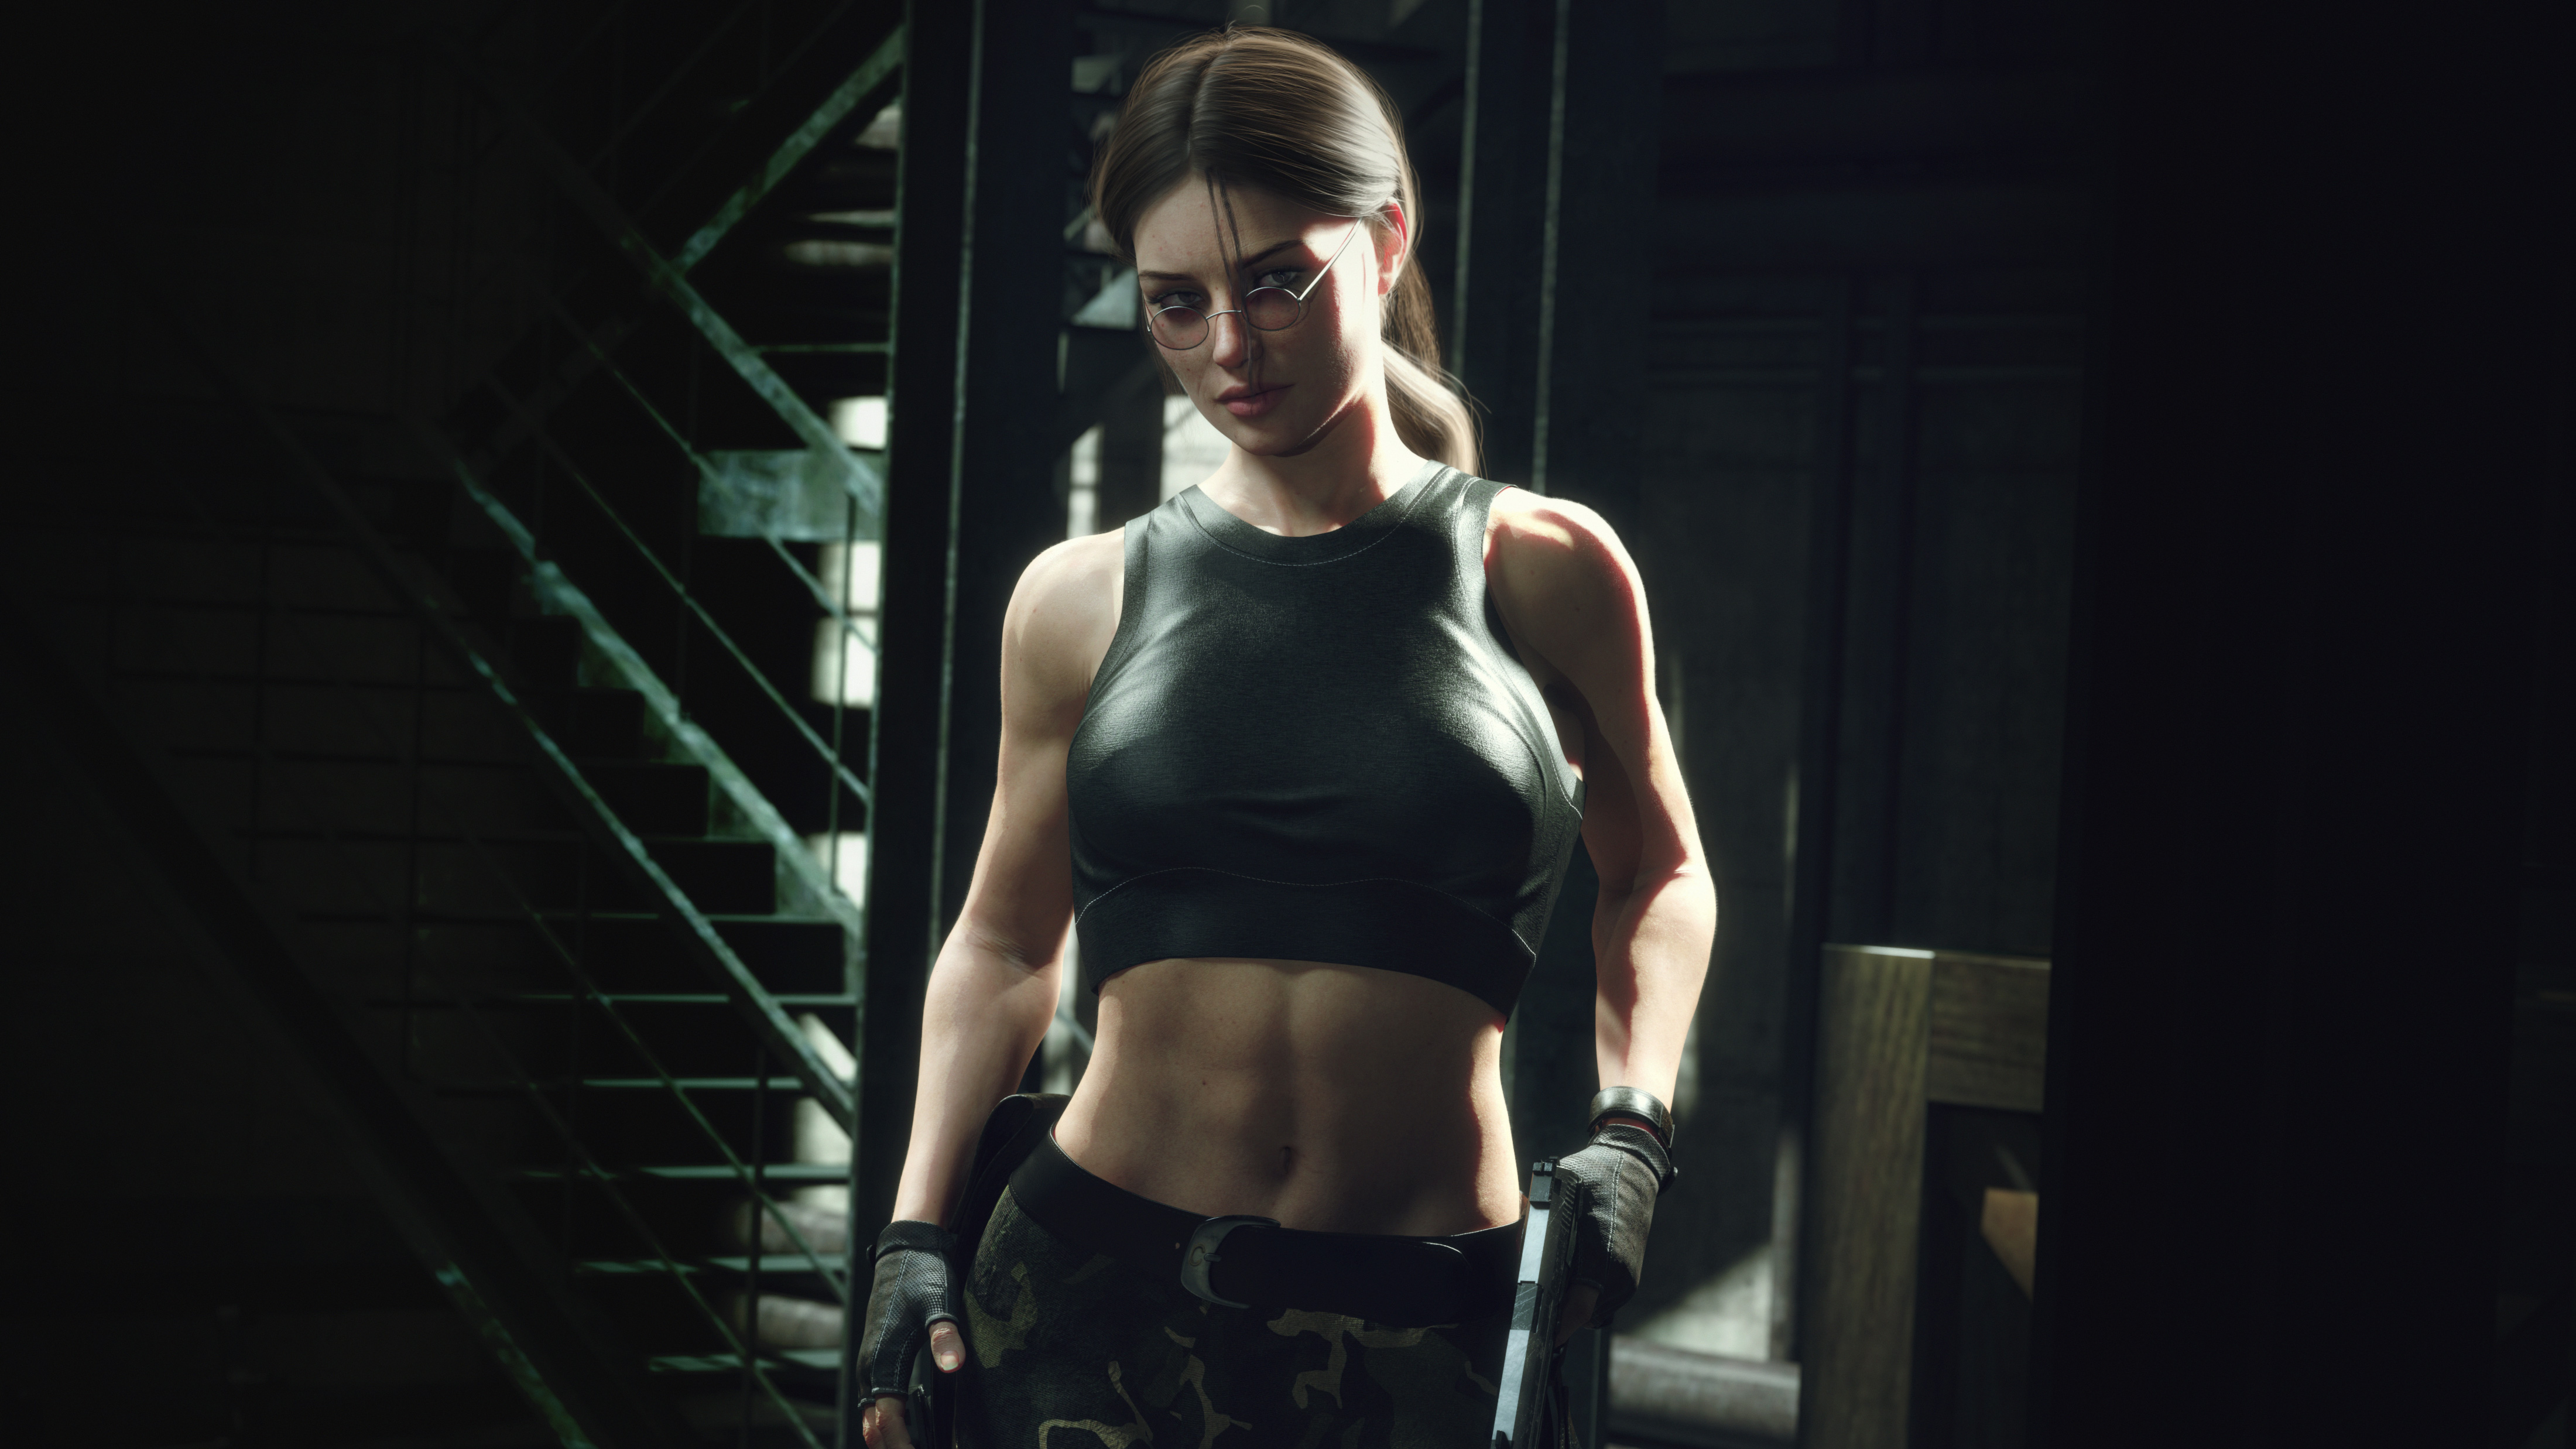 Download Lara Croft Video Game Tomb Raider 4k Ultra Hd Wallpaper By Artimuller